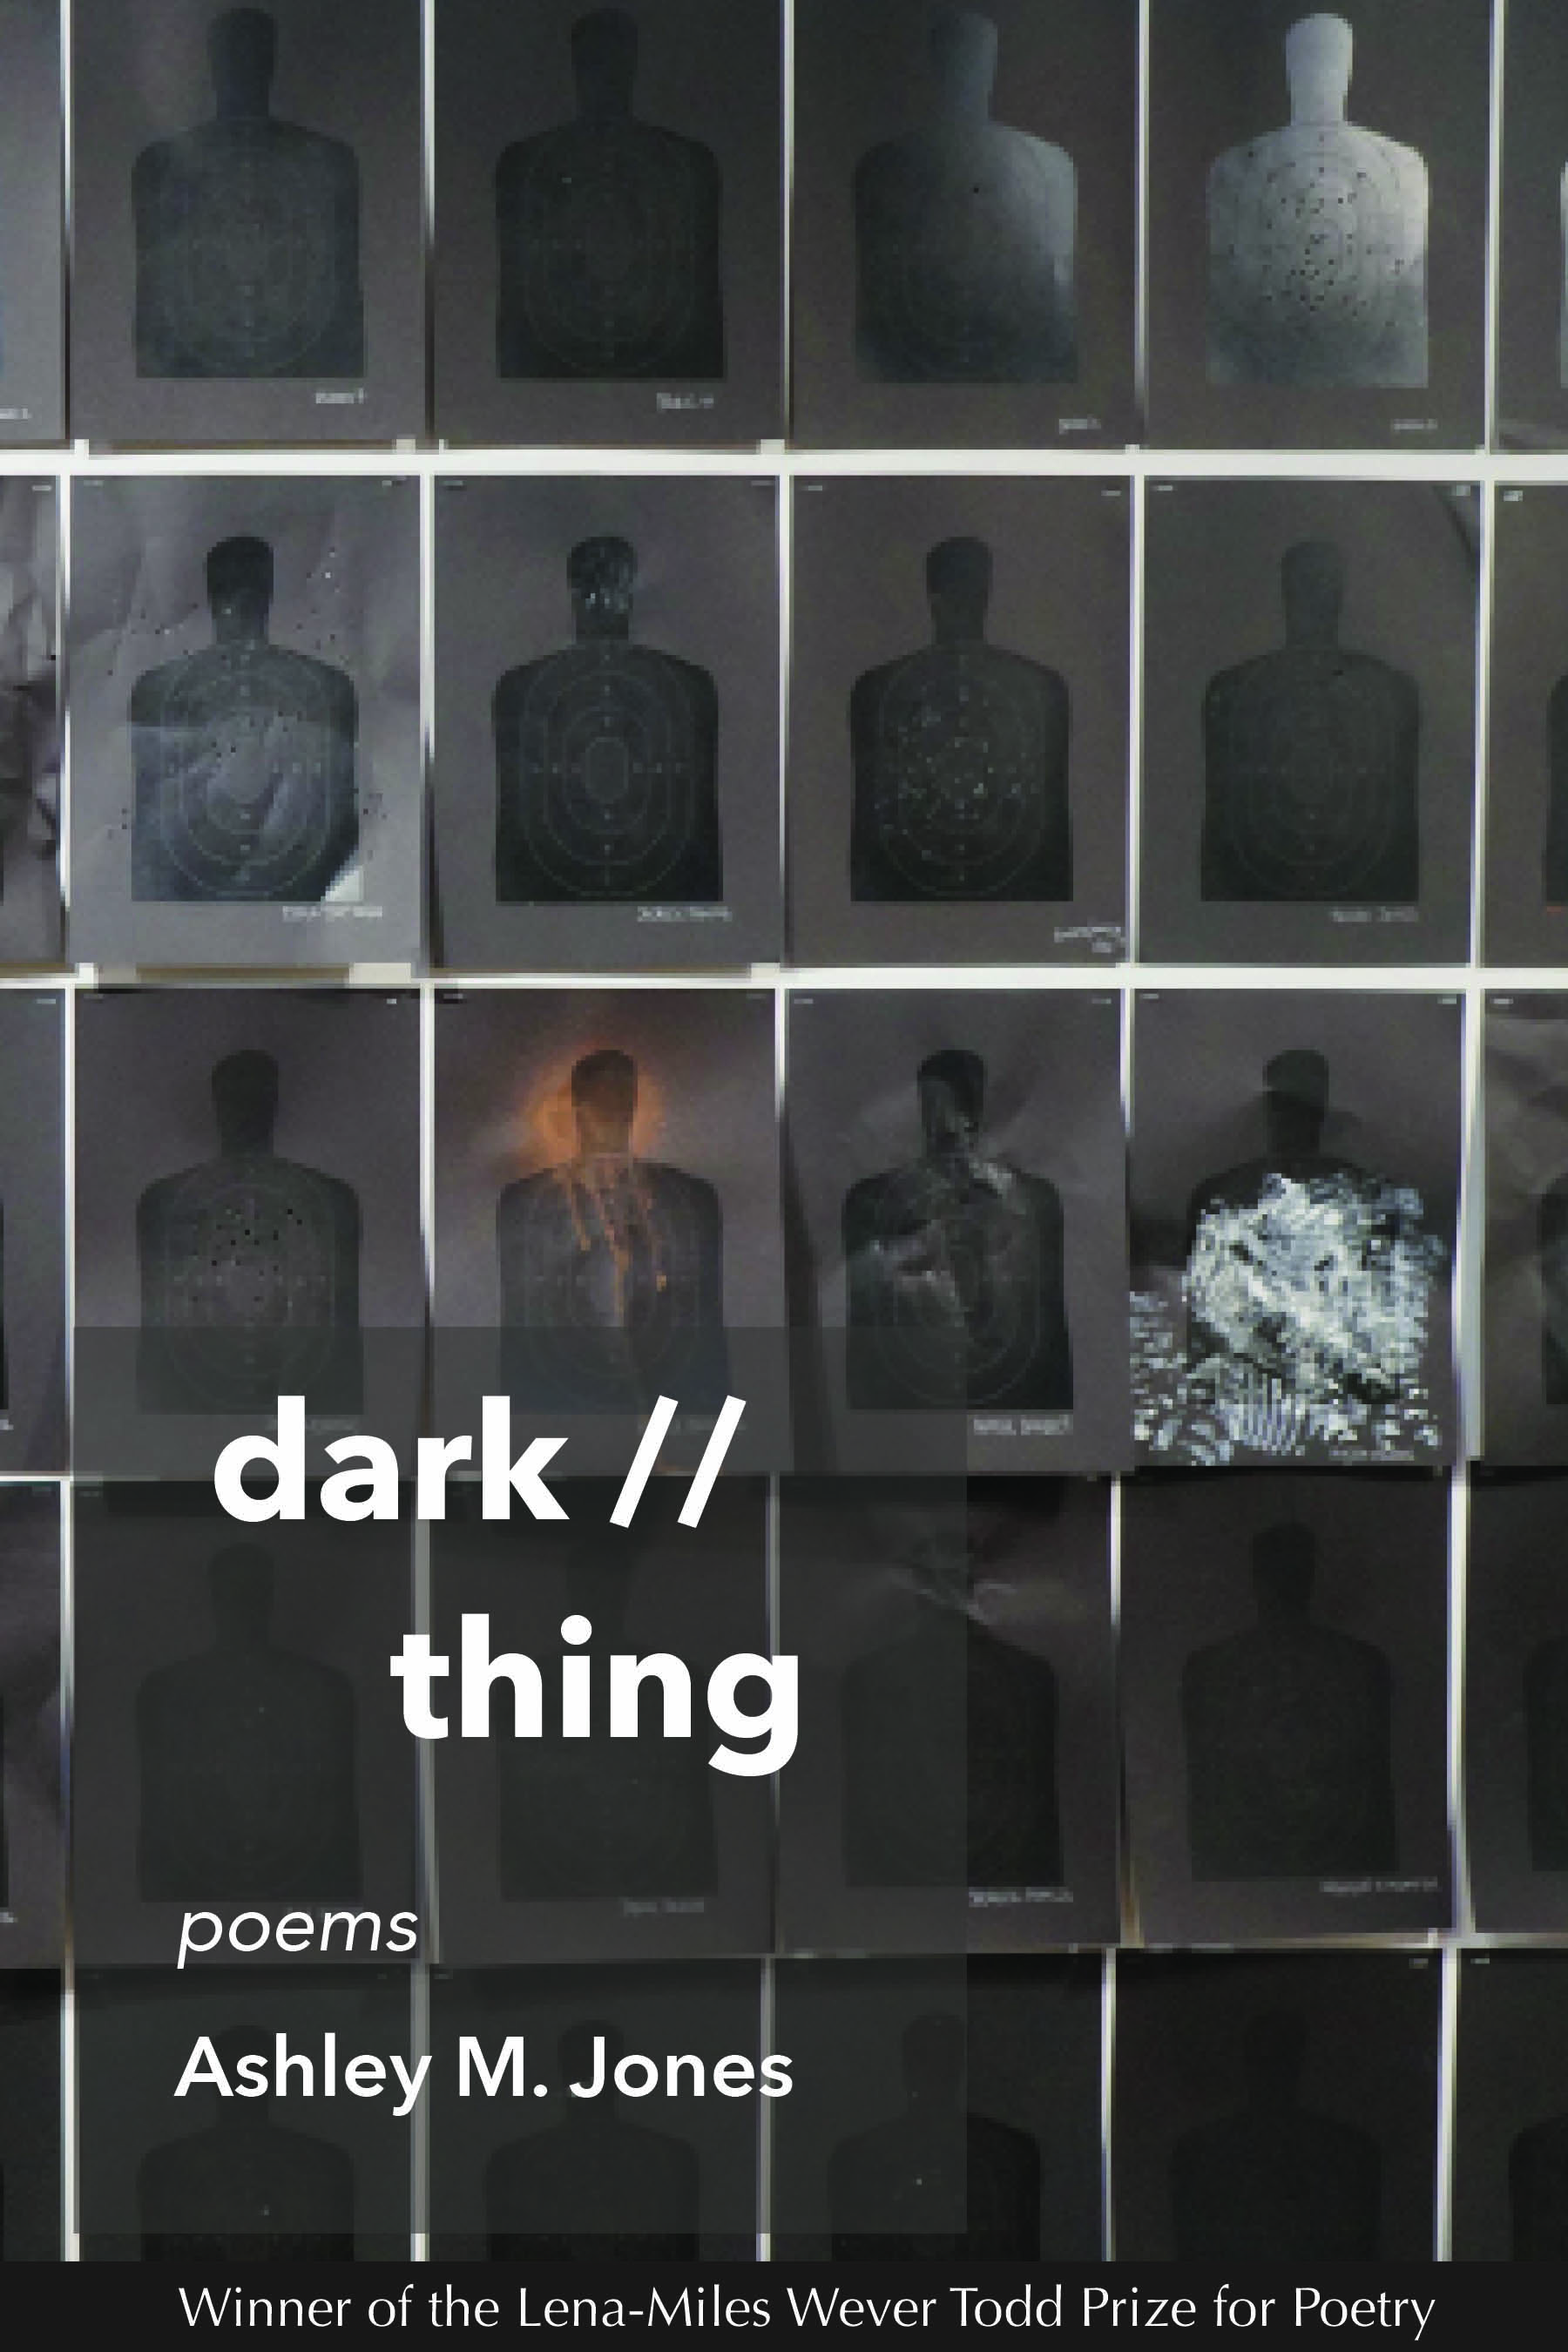 dark // thing by Ashley M. Jones